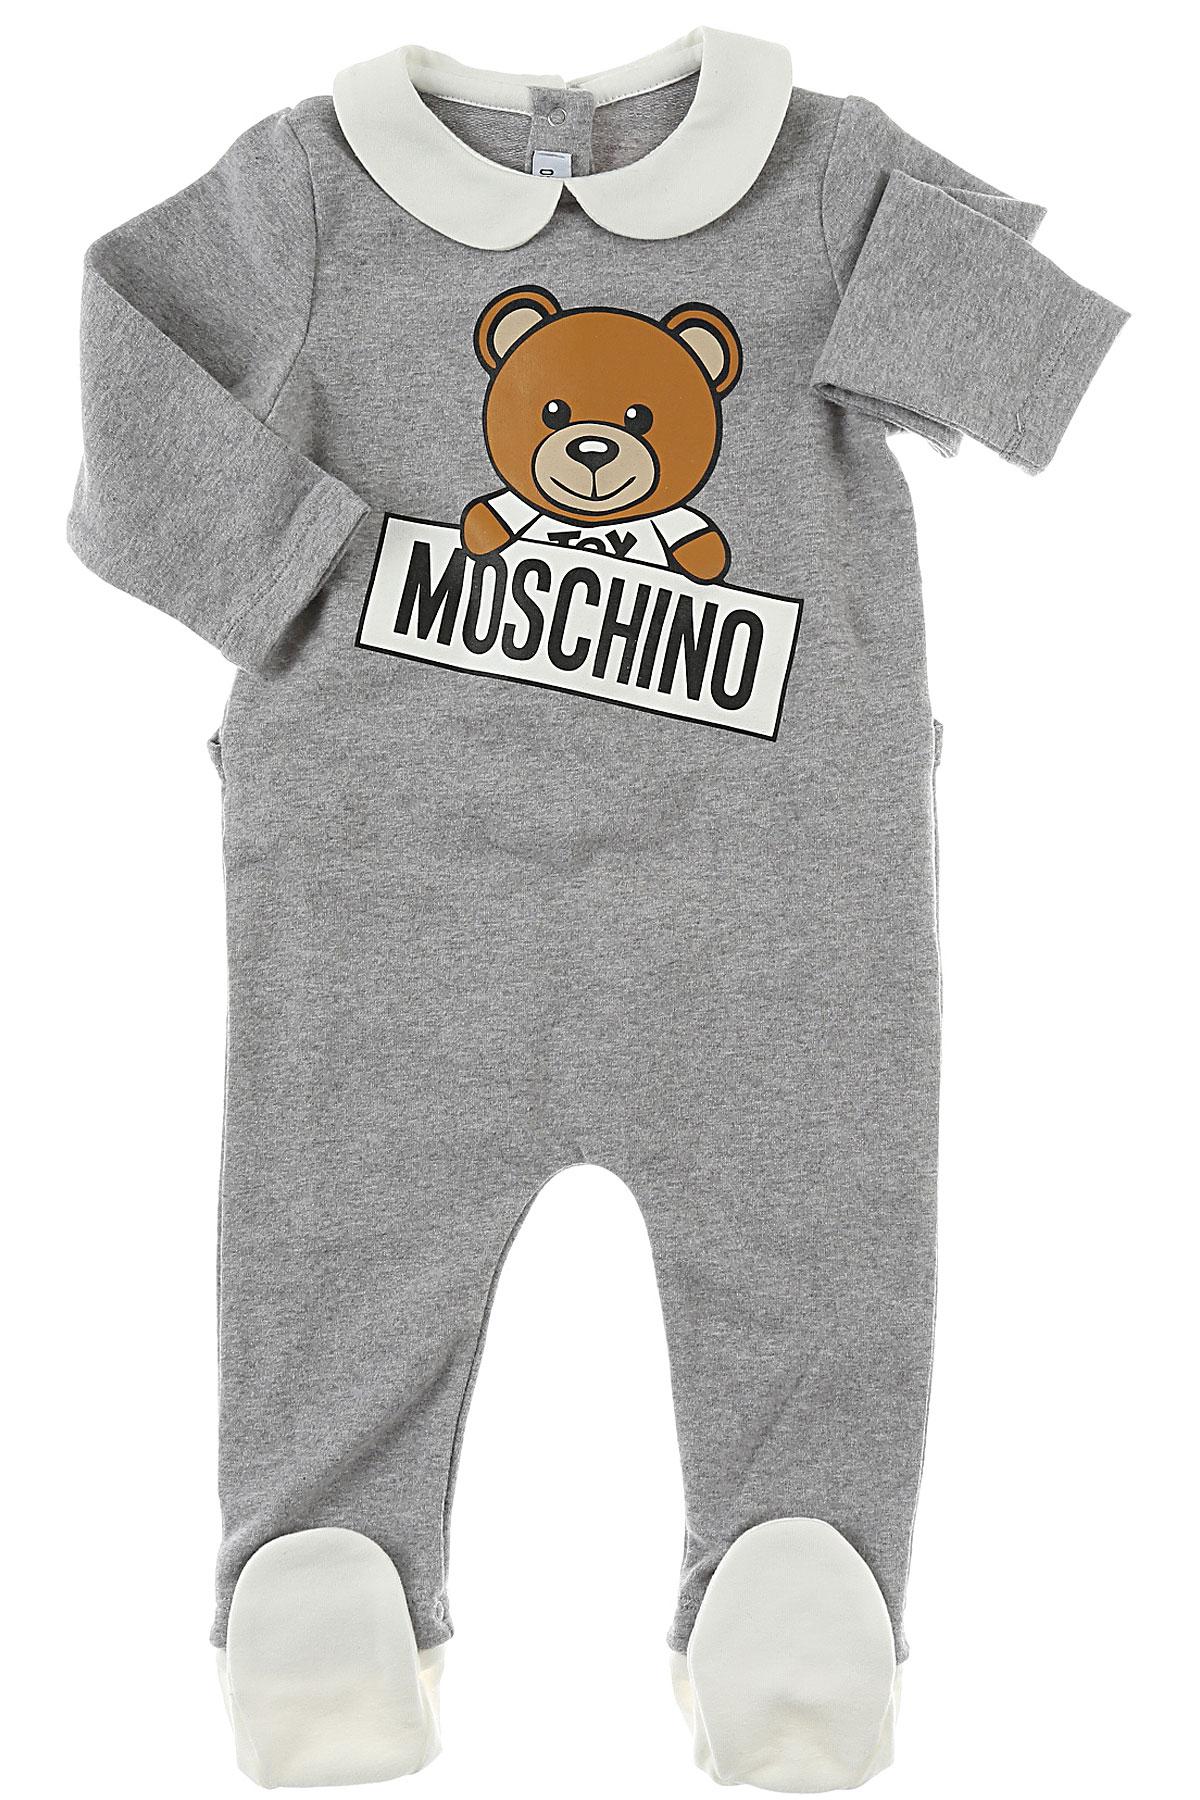 Moschino Synthetic Baby Bodysuits 